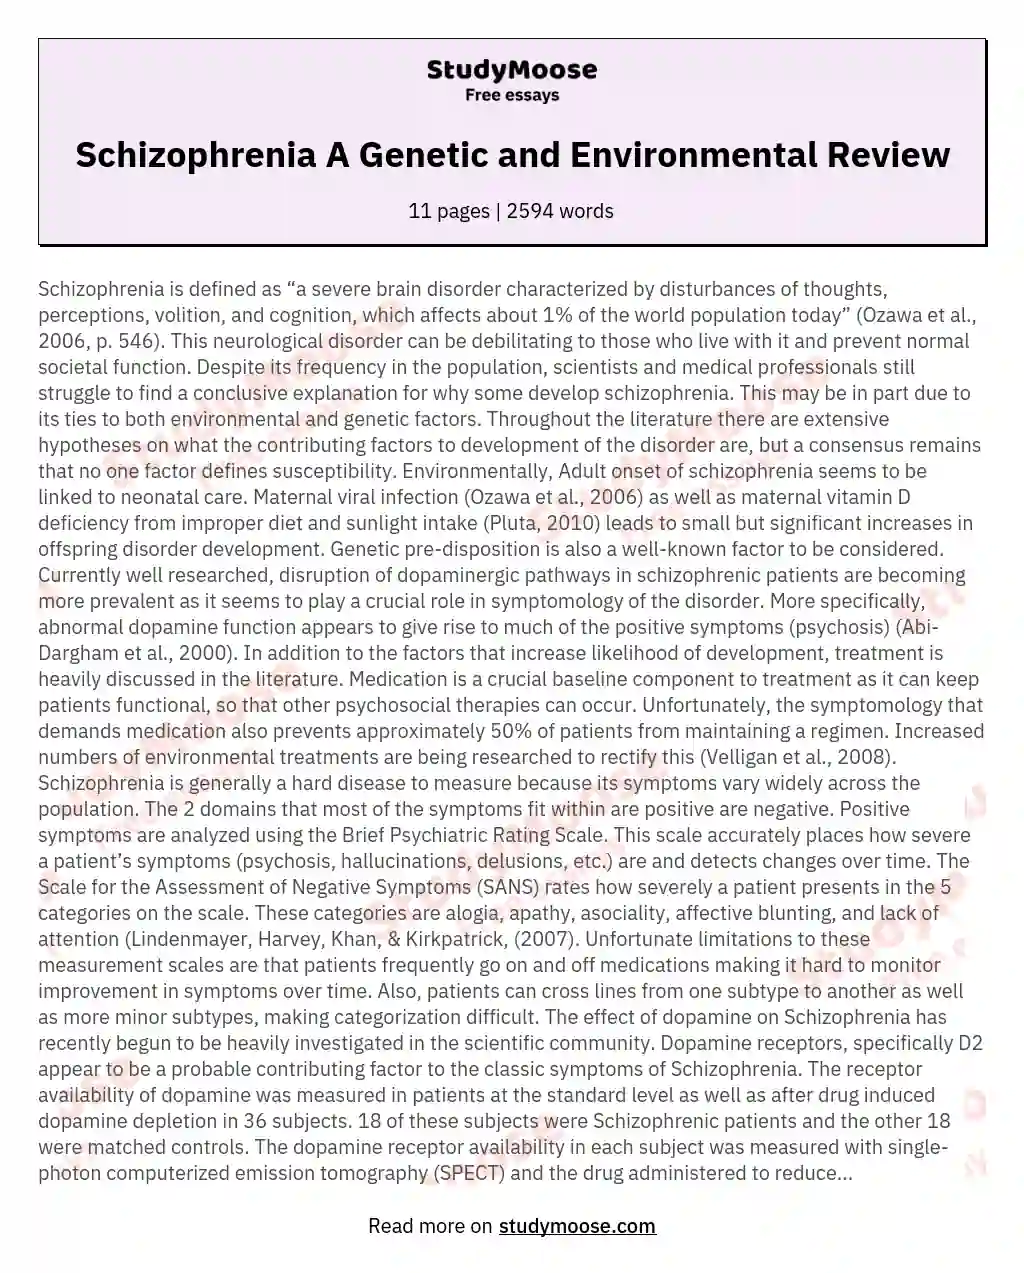 Schizophrenia A Genetic and Environmental Review essay